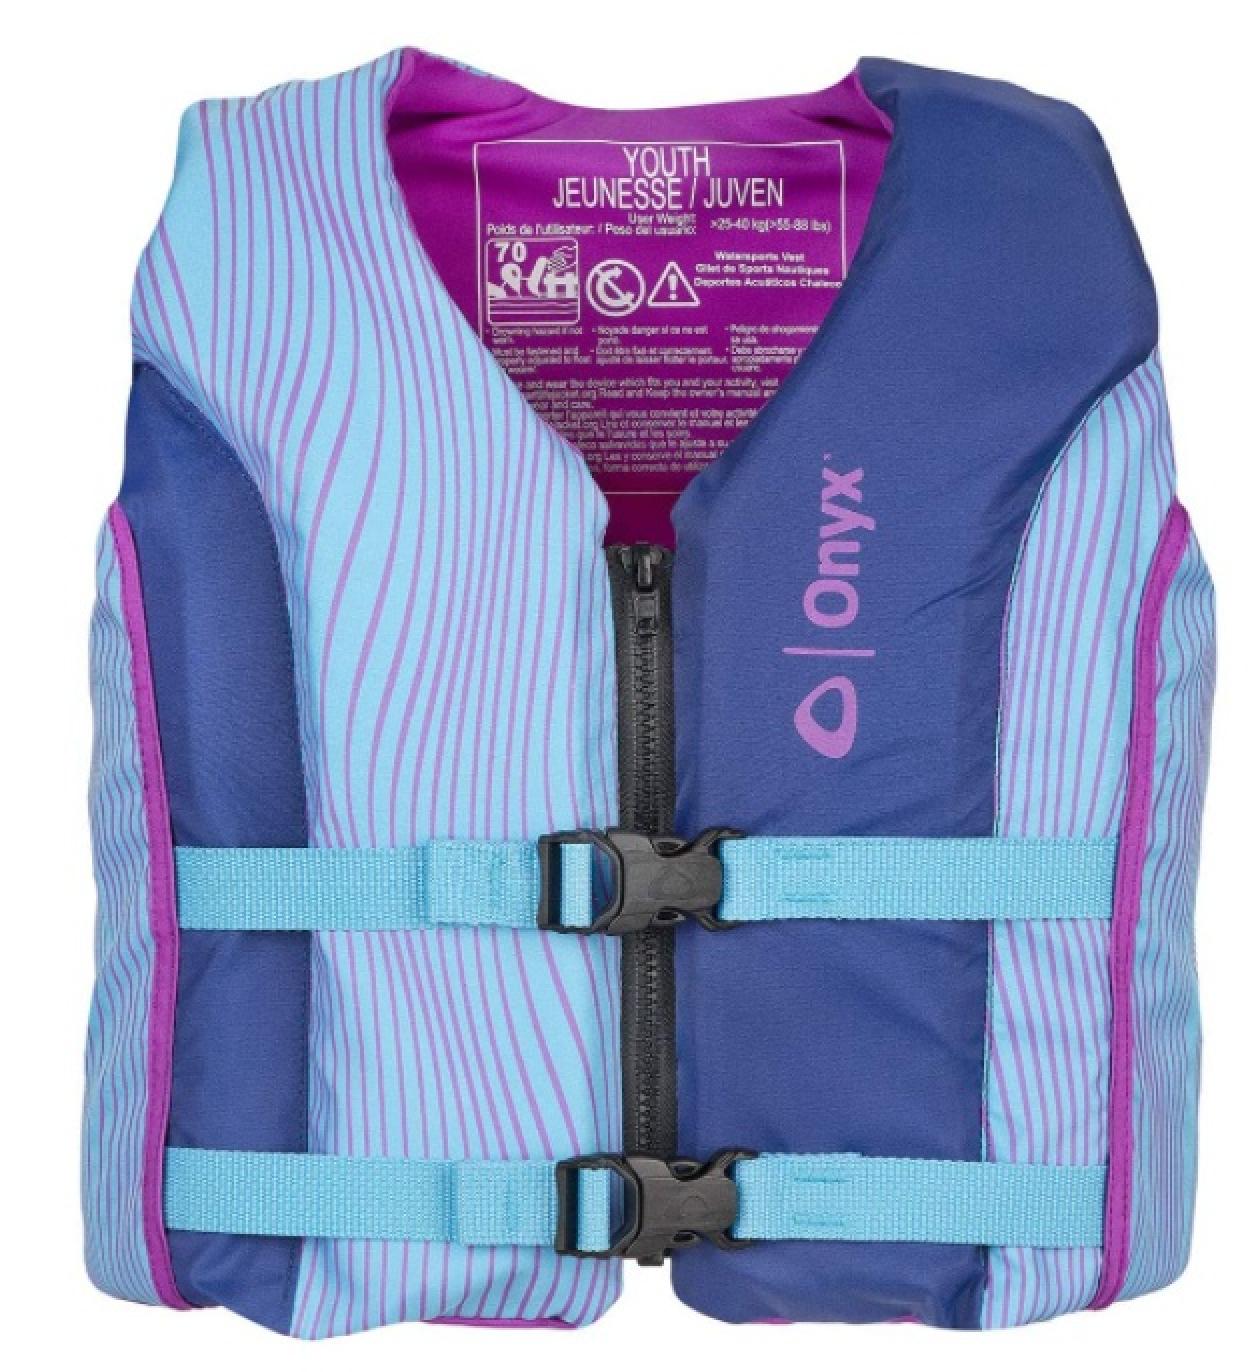 Onyx All Adventure Youth Life Jacket/Vest